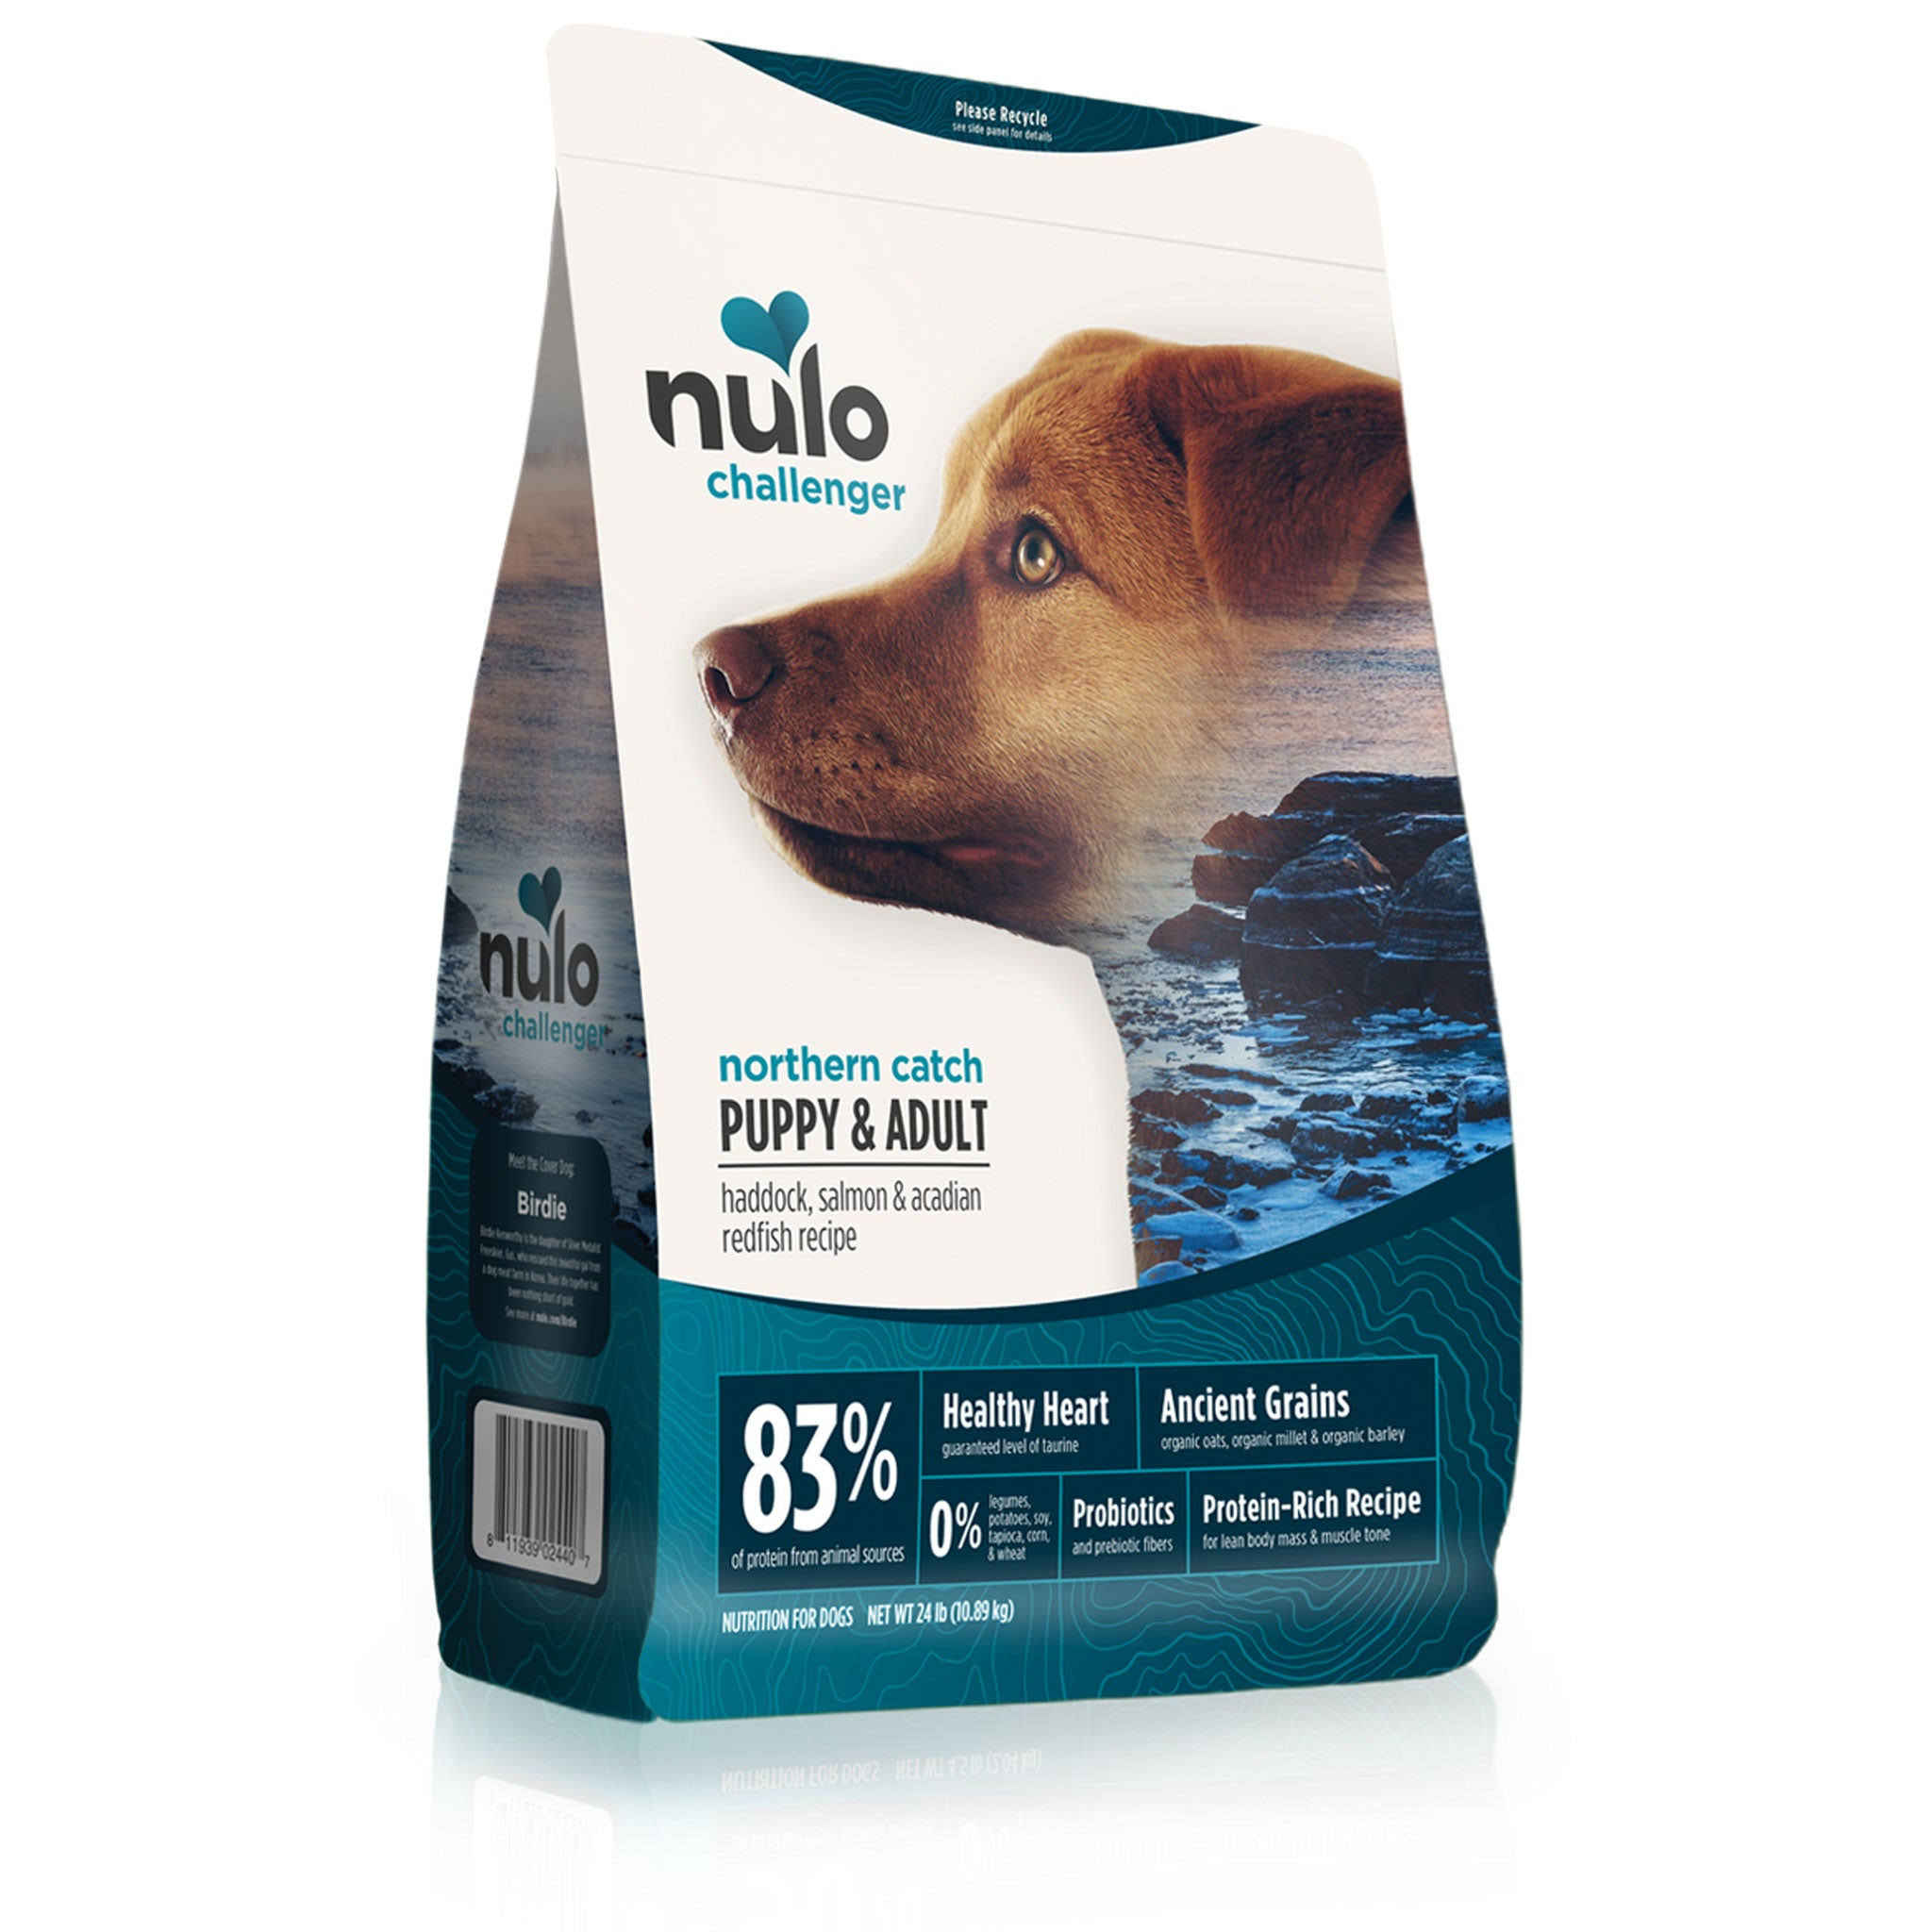 Nulo Challenger Puppy & Adult Dry Dog Food - Haddock, Salmon & Acadian Redfish